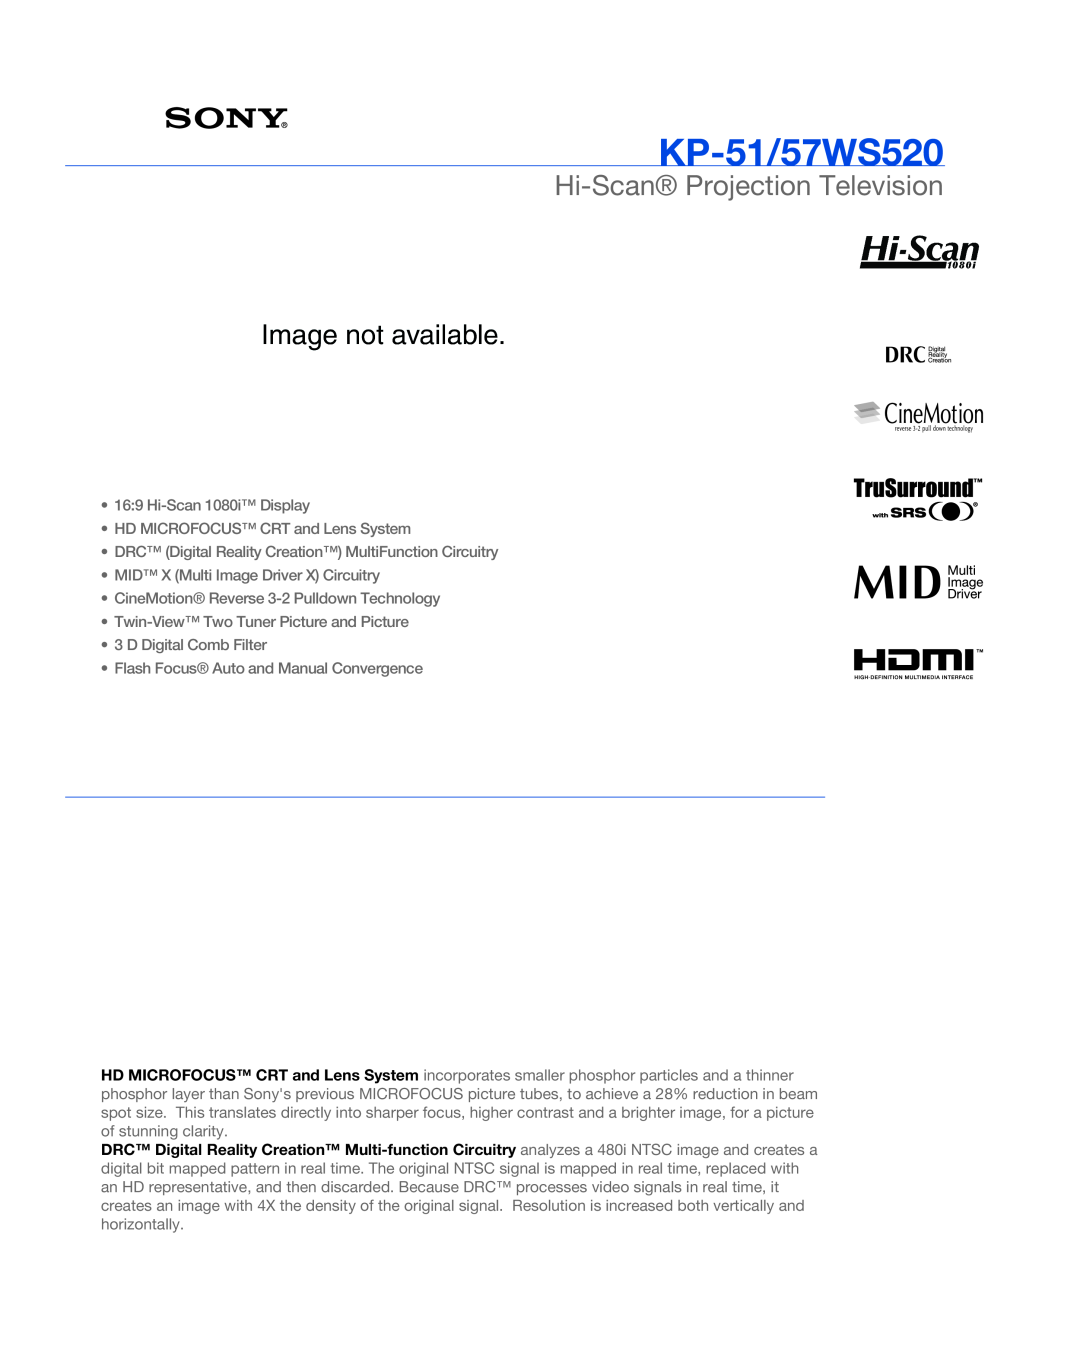 Sony KP 51WS520, KP 57WS520 manual KP-51/57WS520, Hi-Scan Projection Television 